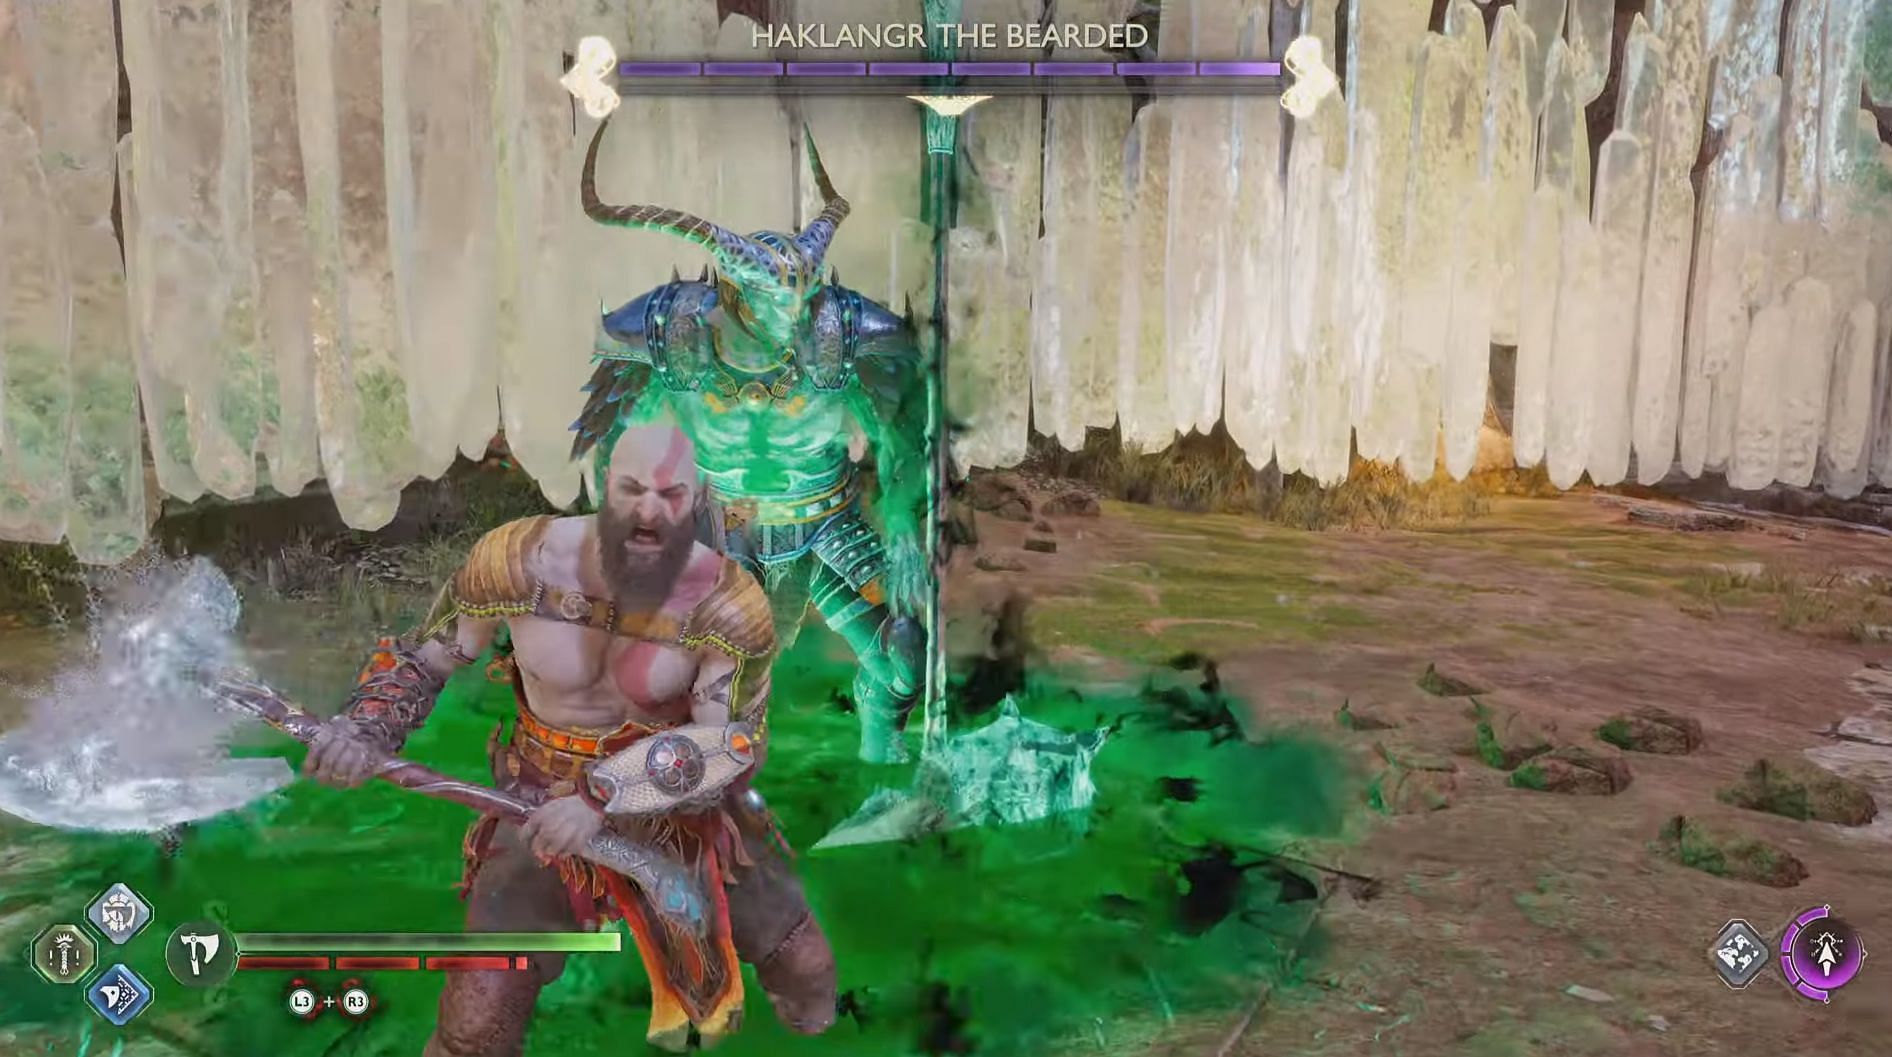 Kratos faces off against Haklangr the Bearded in God of War Ragnarok (Image via Sony)